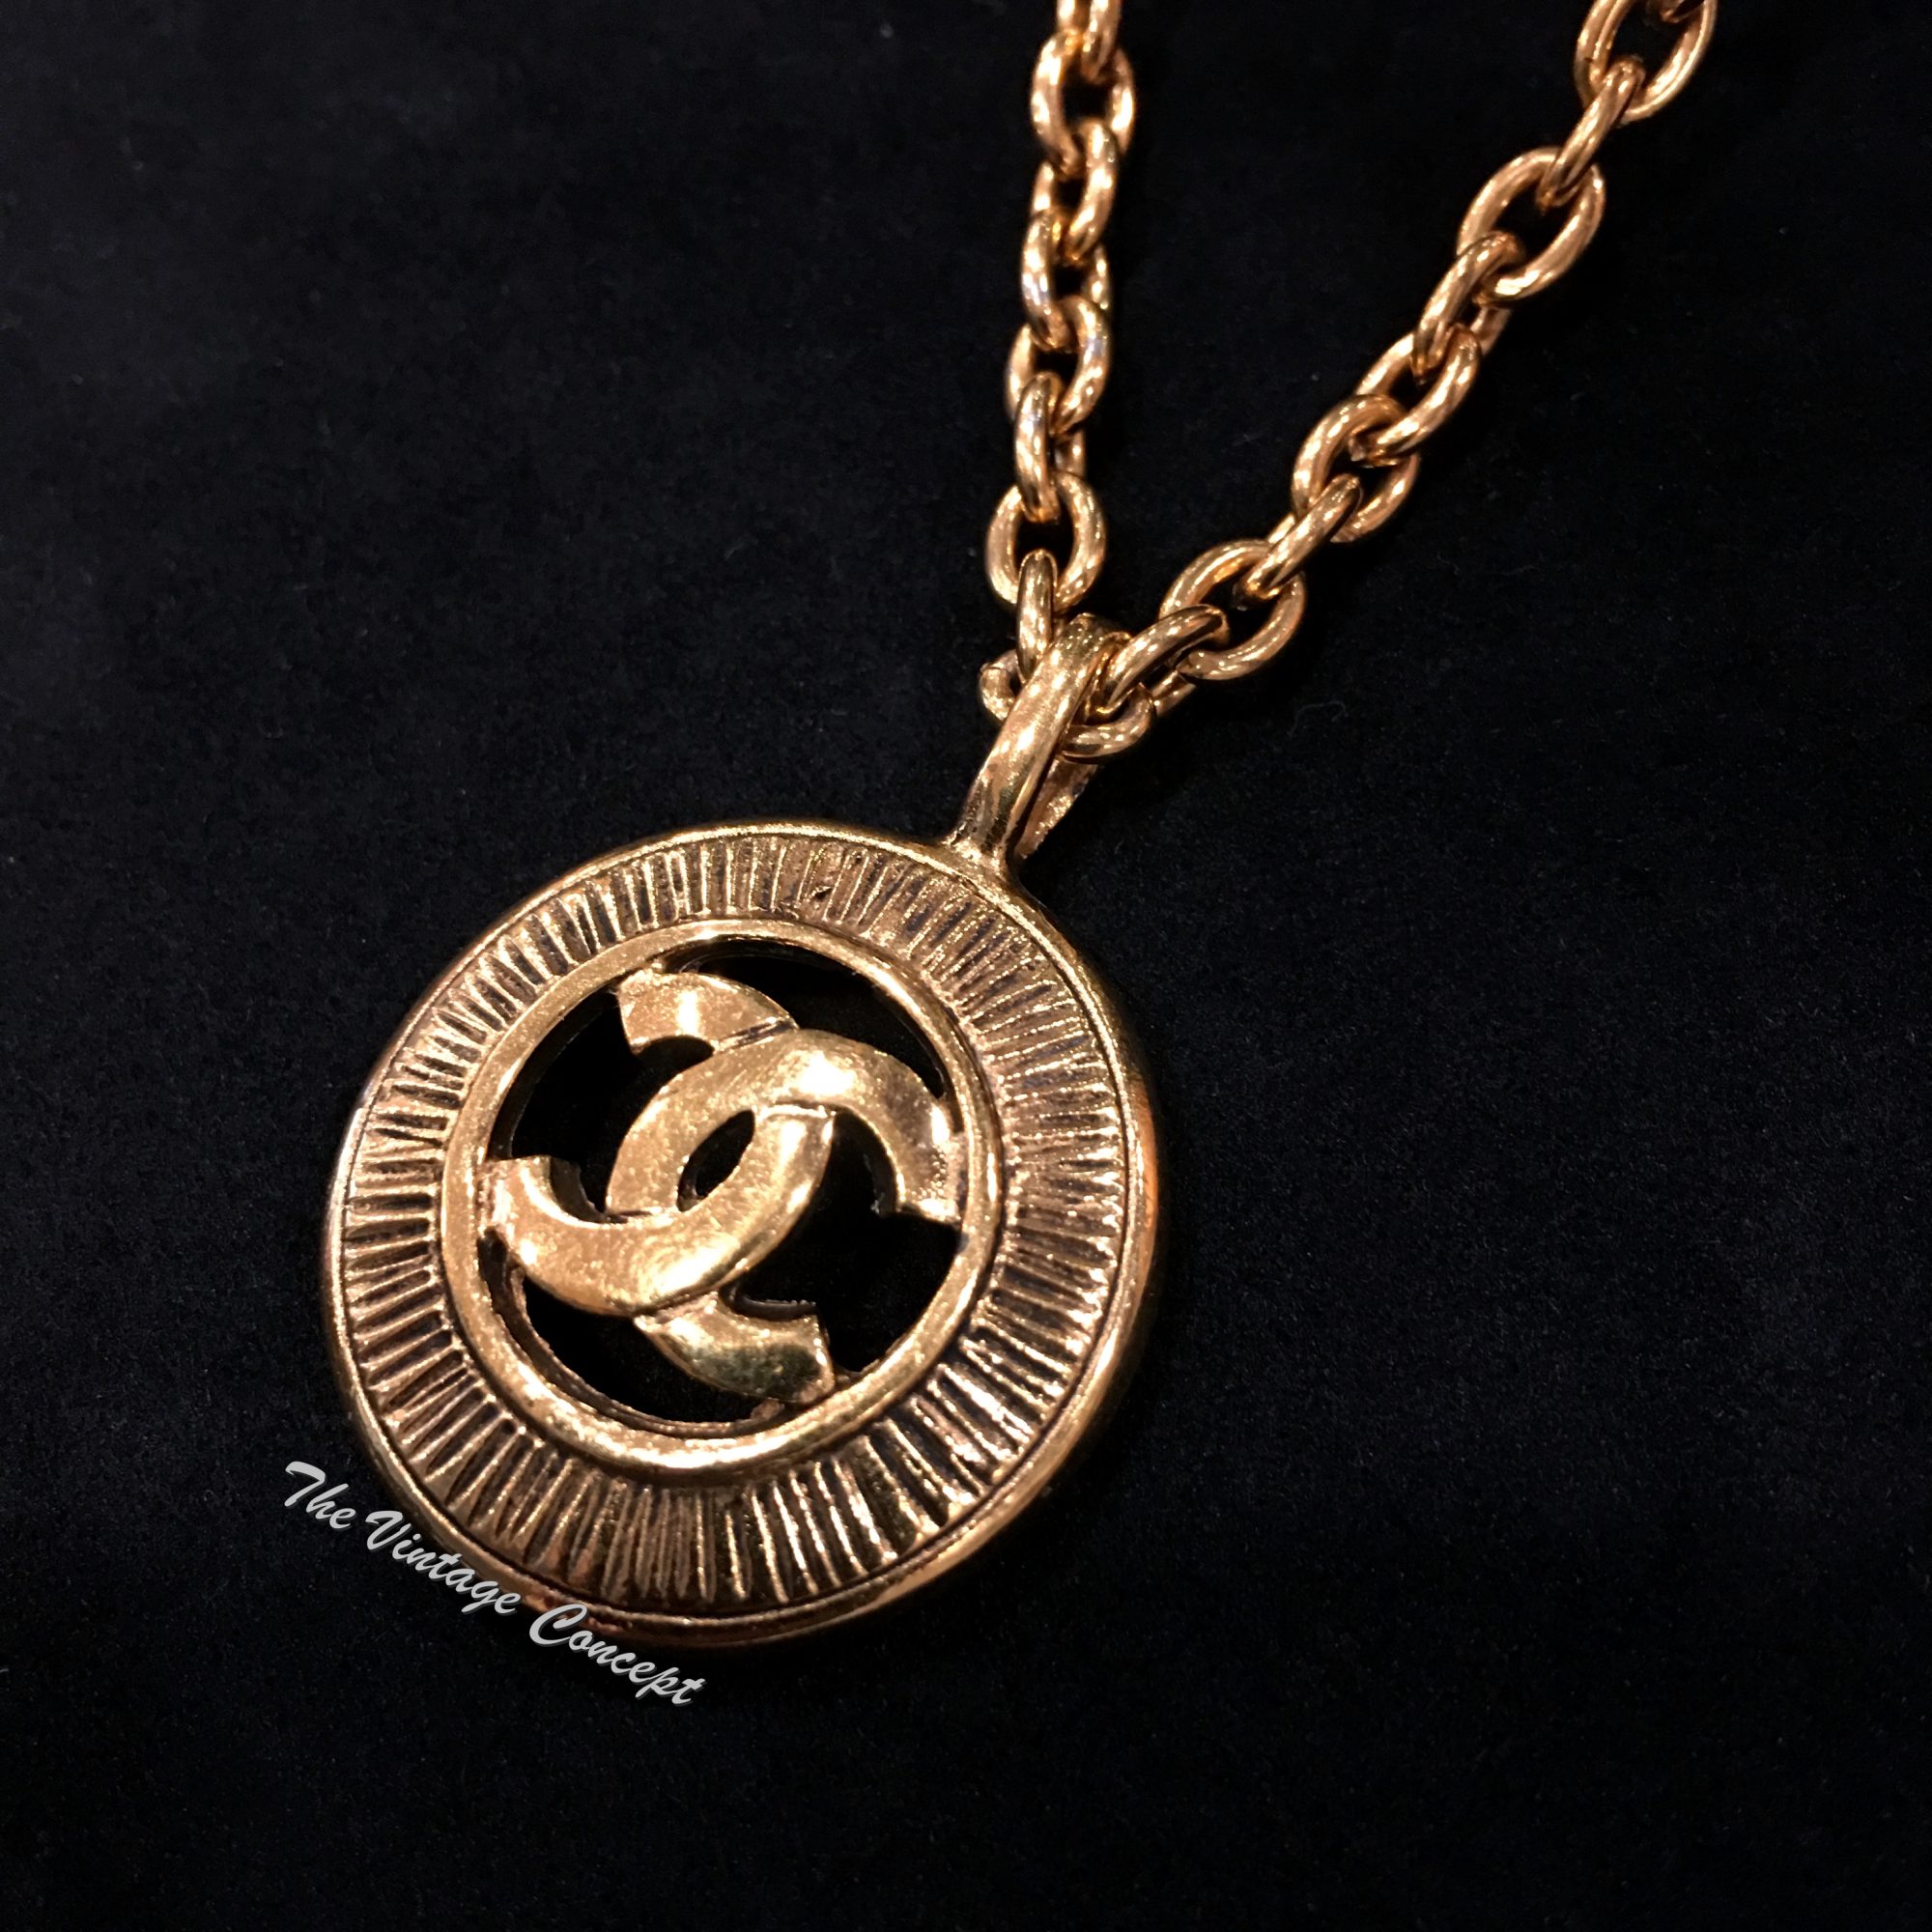 Chanel Gold Tone Pendant Short Necklace 80's (SOLD) - The Vintage Concept